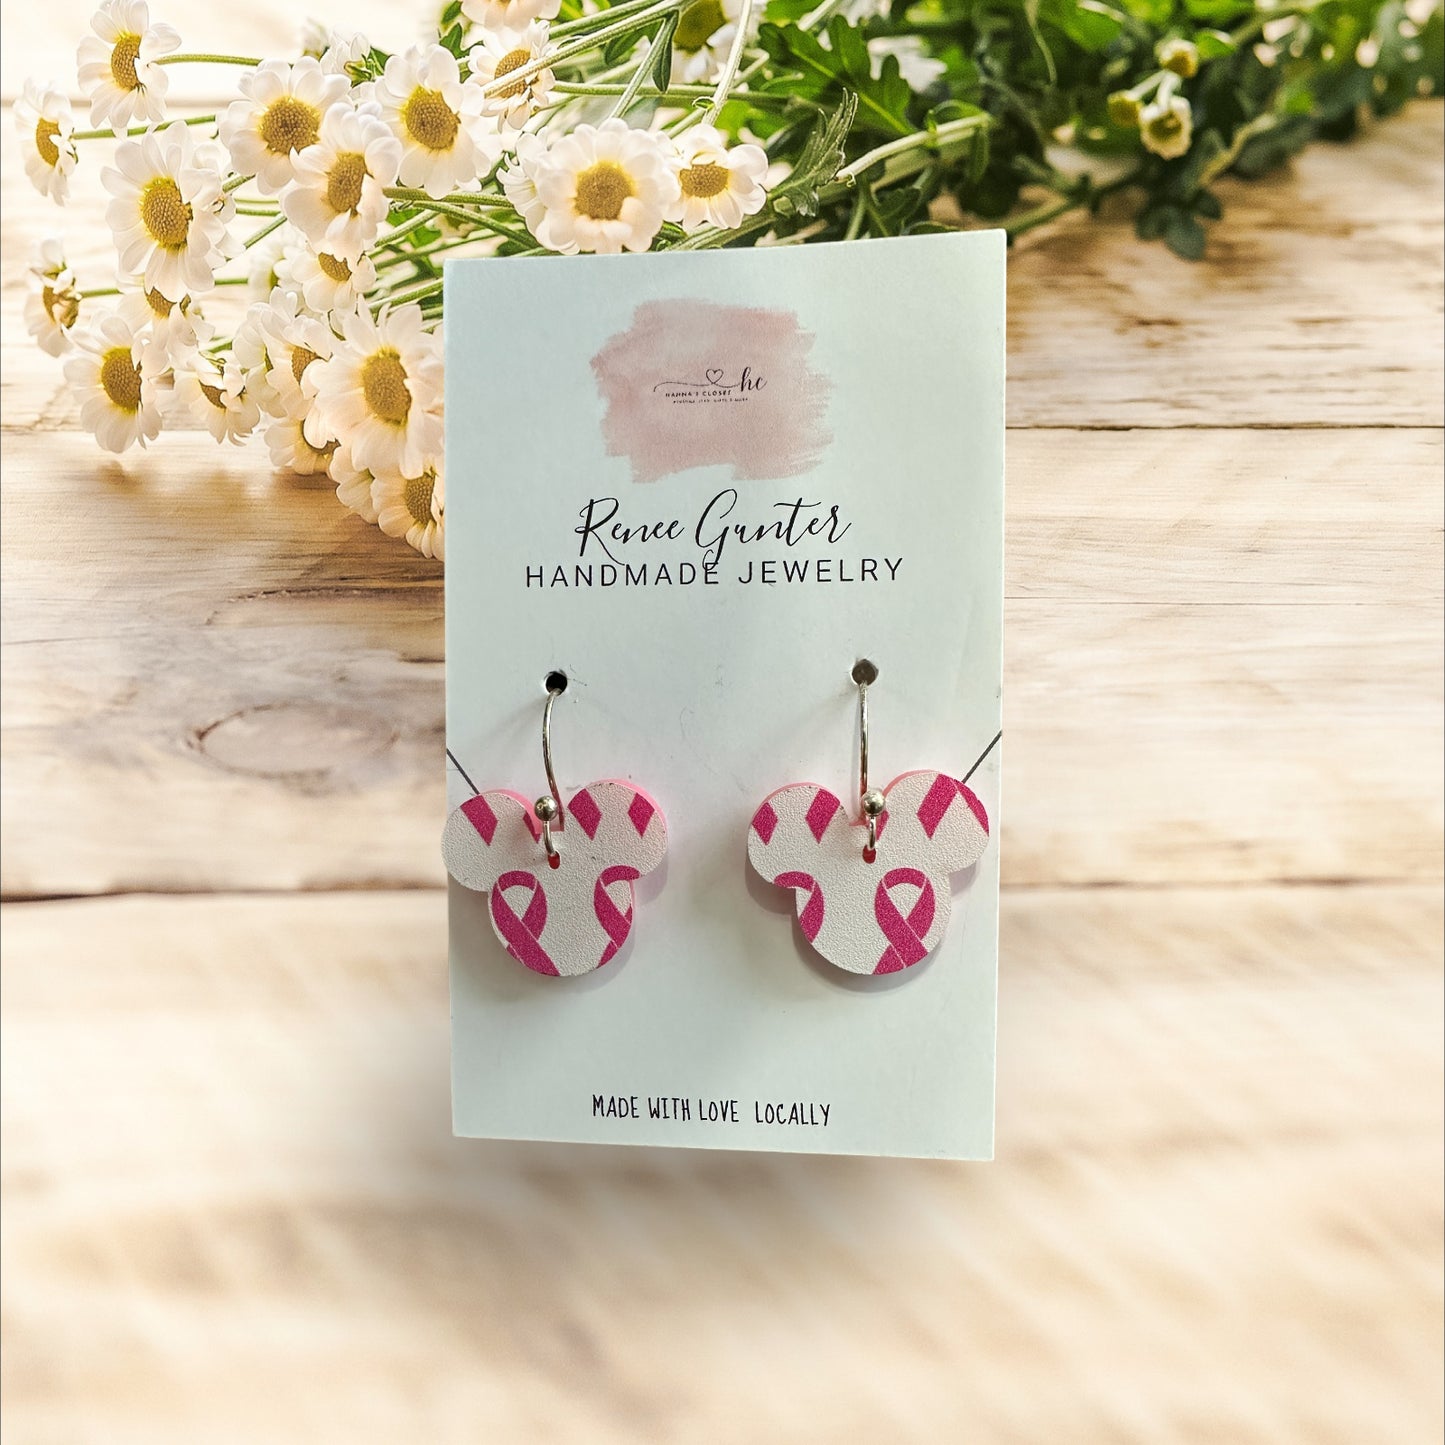 Handmade Mouse earrings